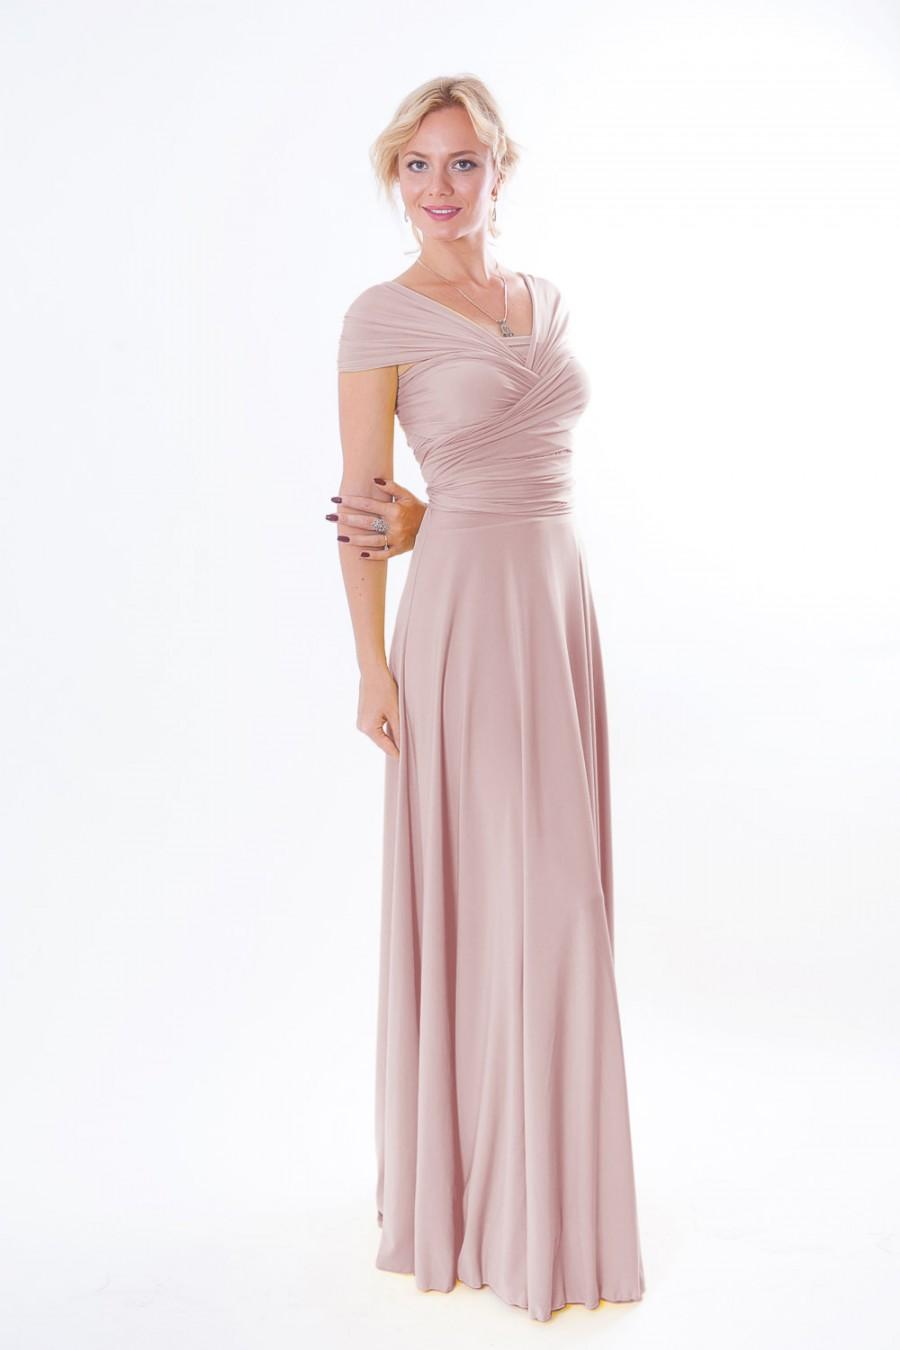 Dusty Pink Infinity Dress - Floor Length Wrap Dress #2683143 - Weddbook